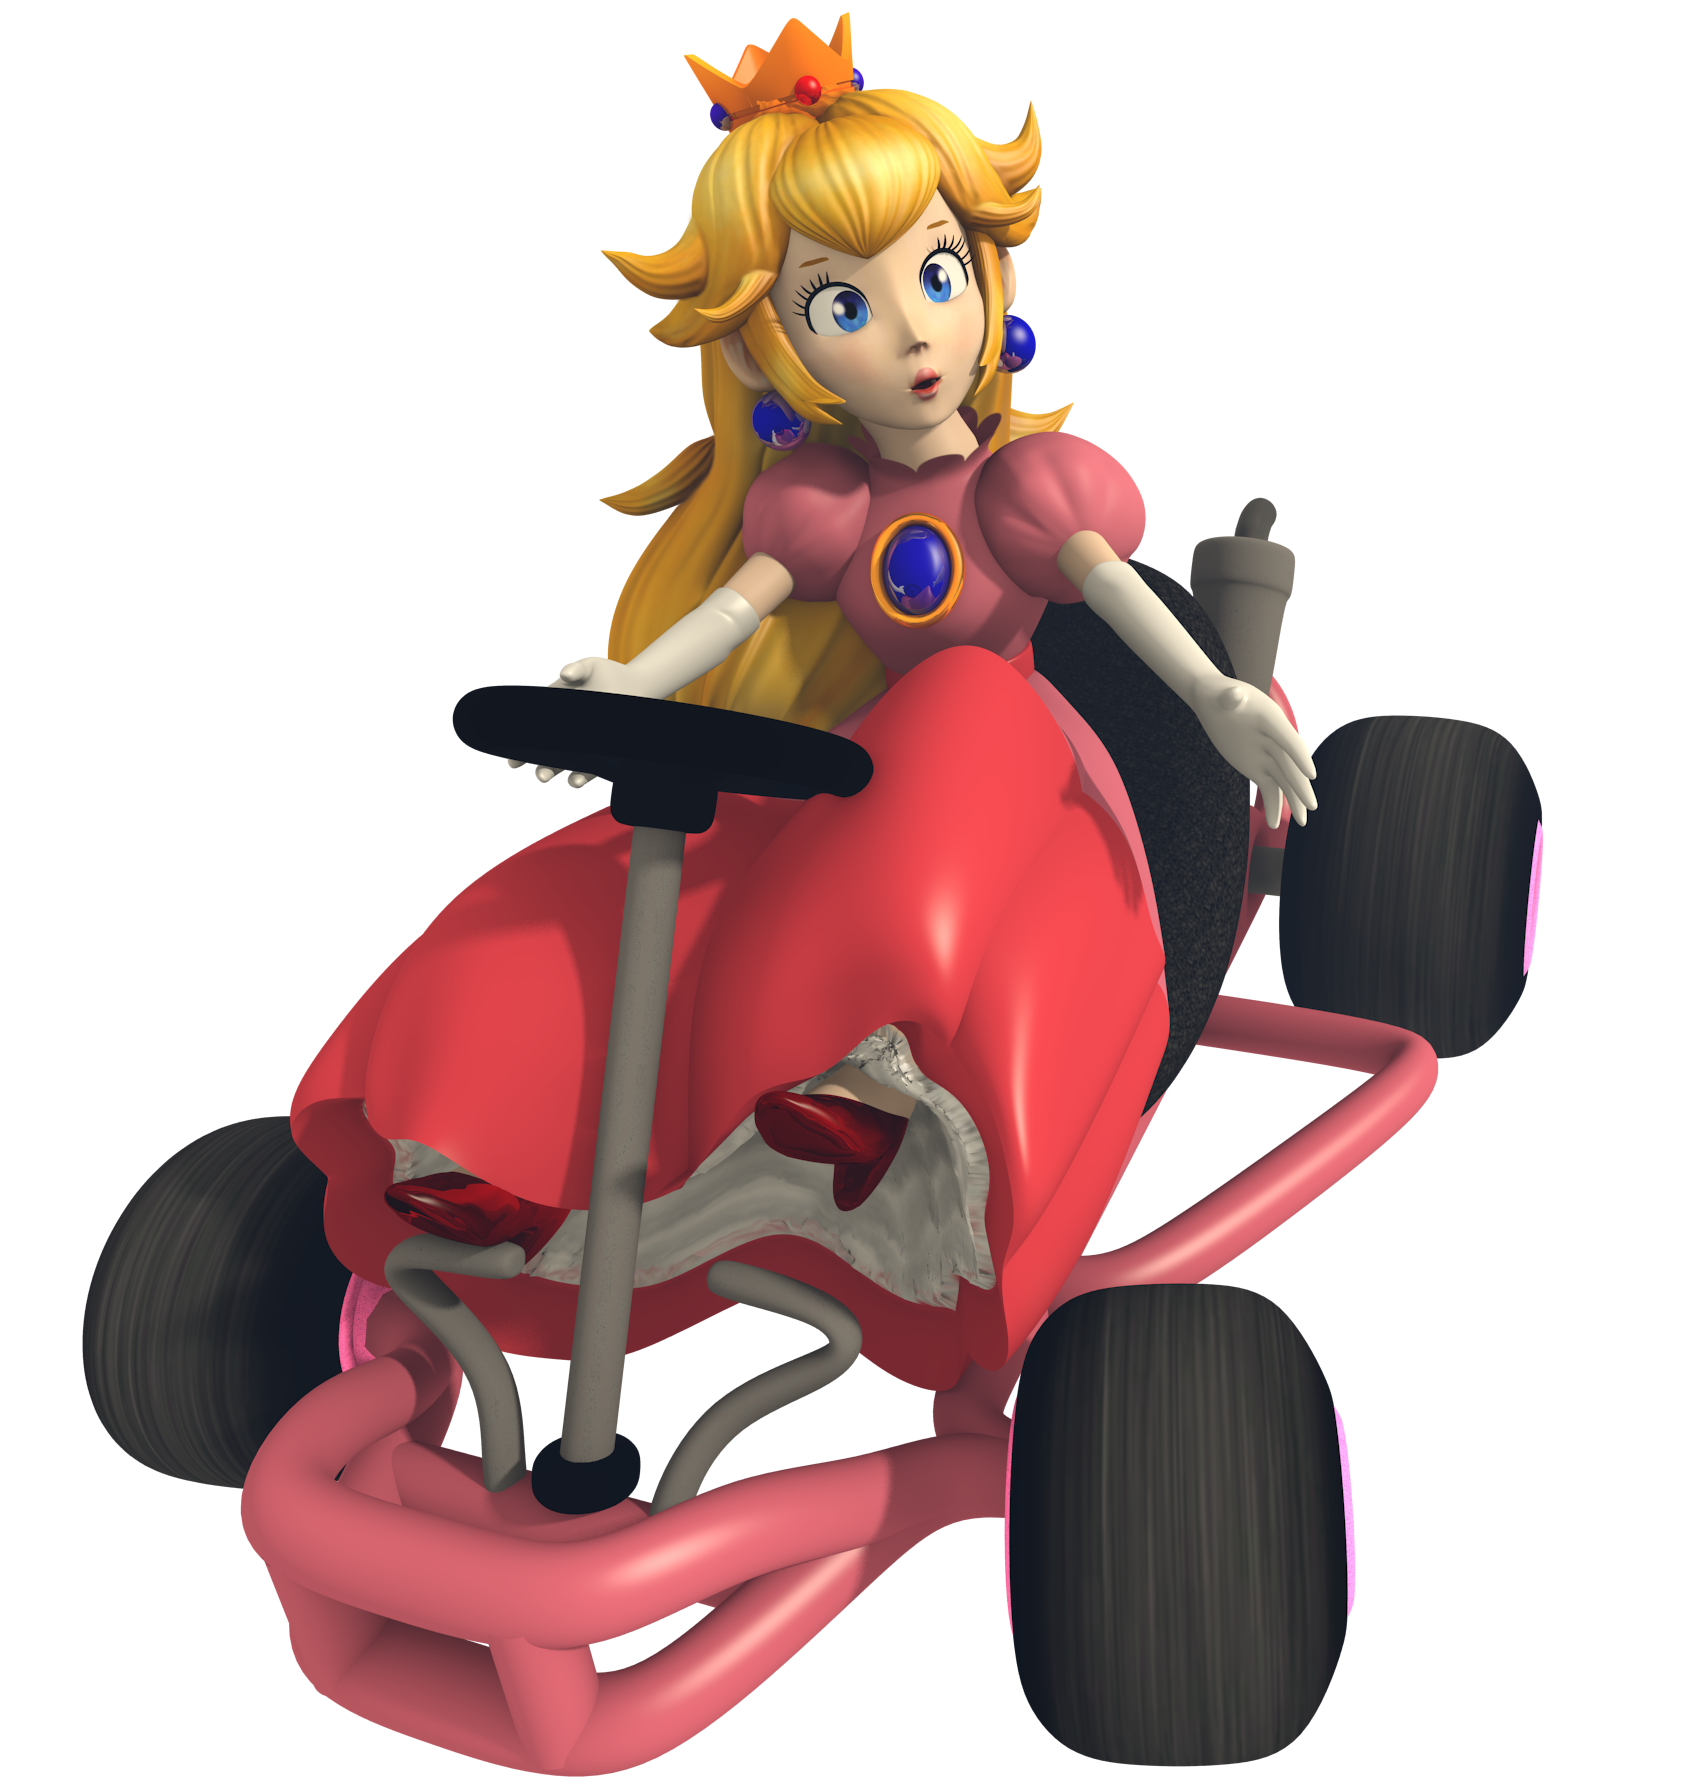 Princess Peach - Mario Kart Commemorative Pack by Vinfreild on DeviantArt